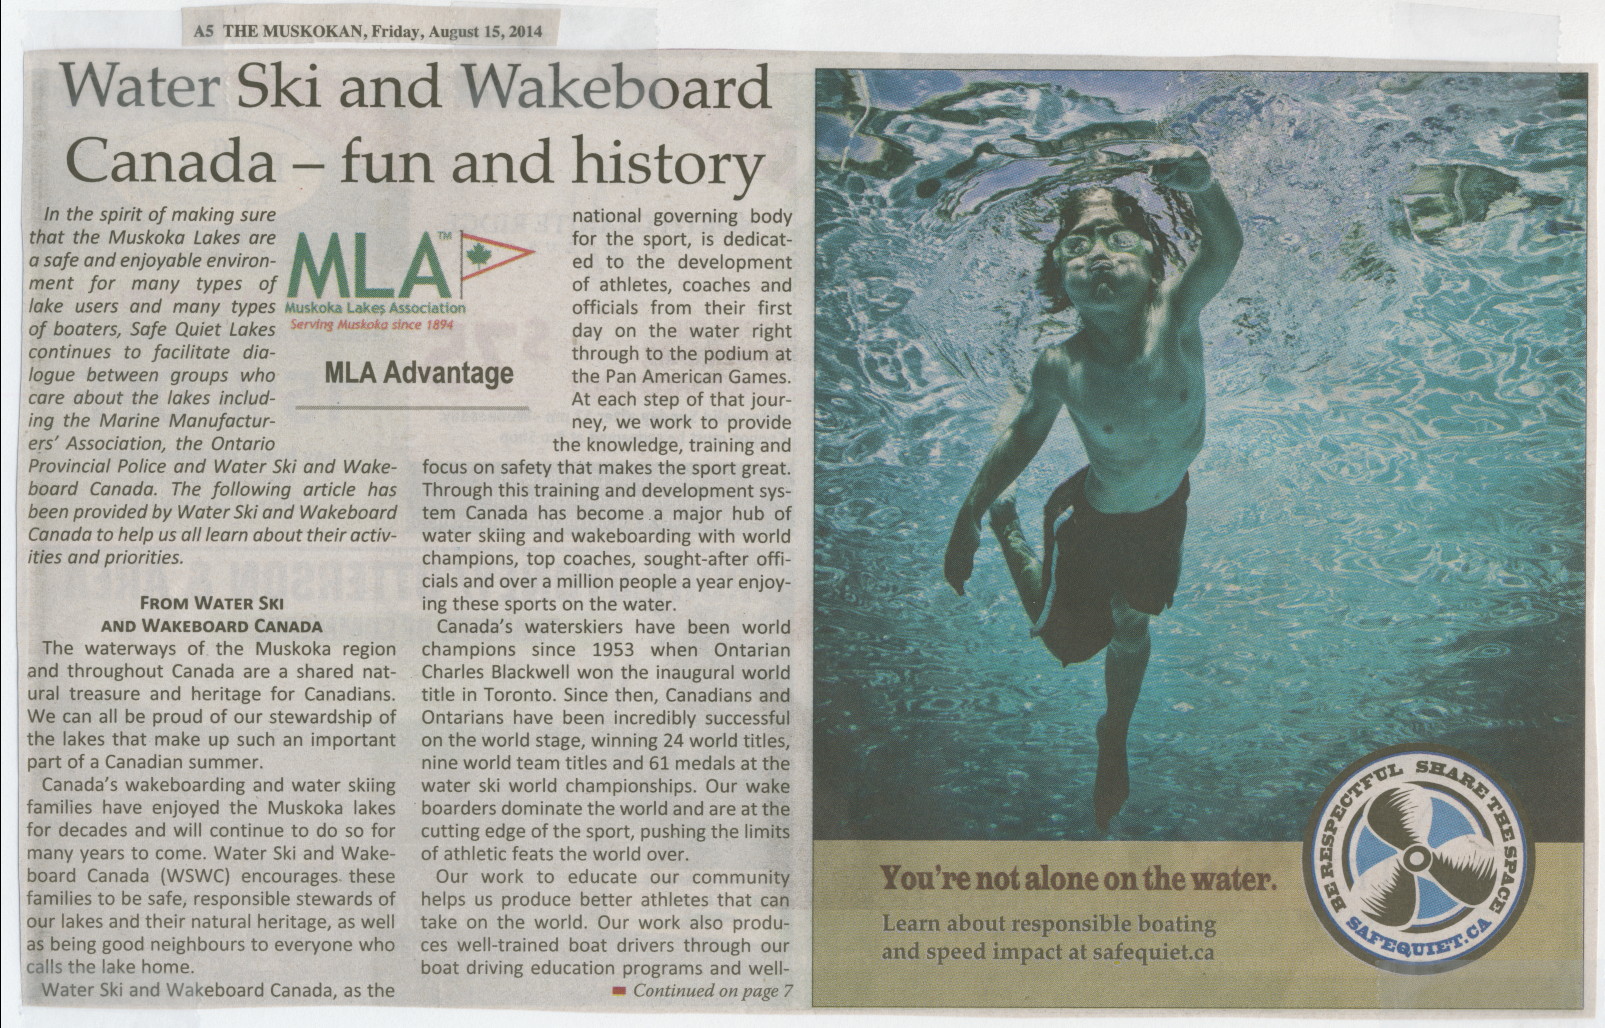 2014 - Aug 5 - Water Ski and Wakeboard Canada - fun and history - The Muskoka page 5 & 7 - 1 of 2